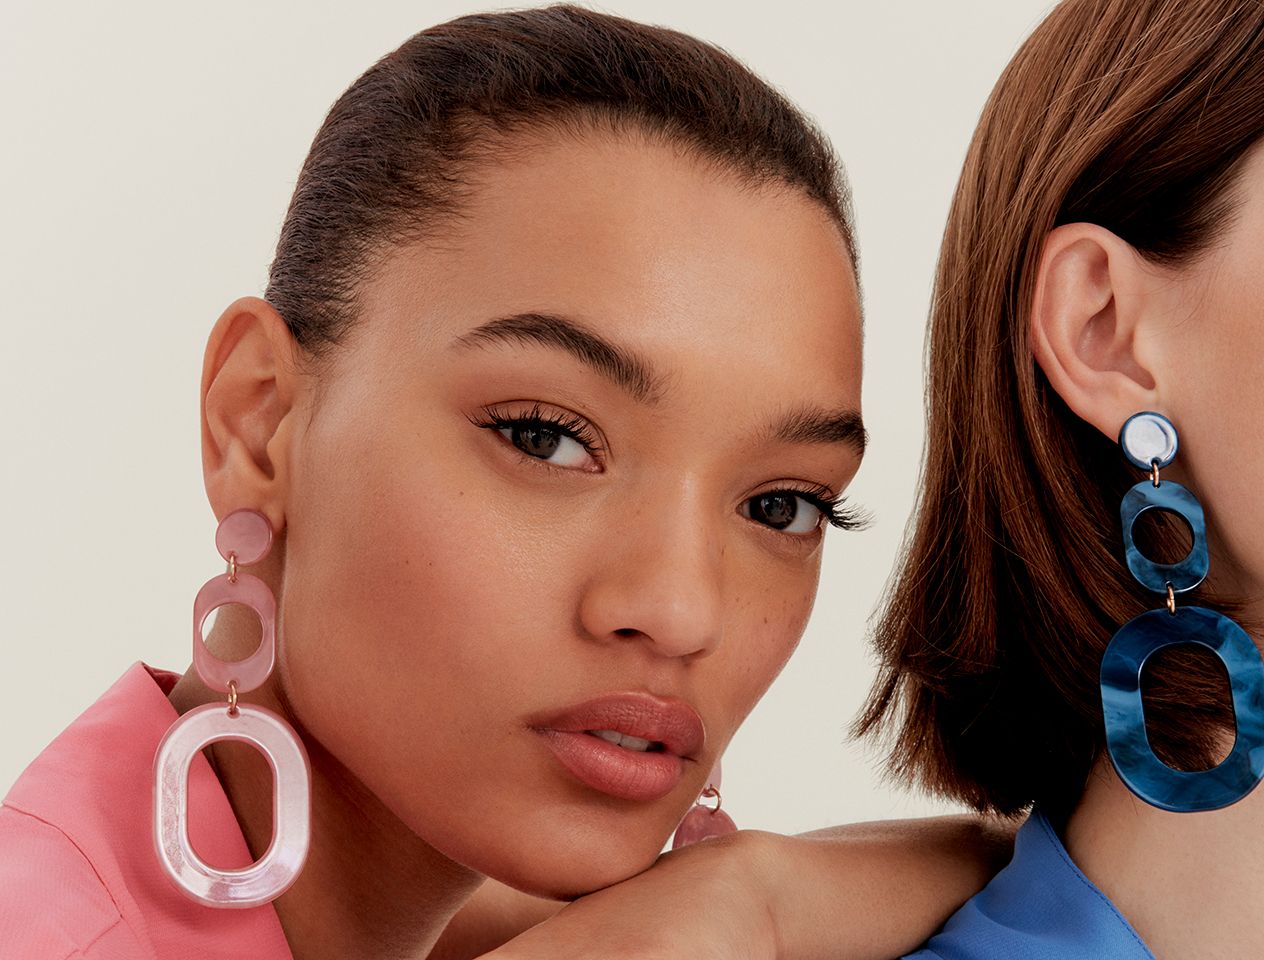 Statement earrings in pink resin